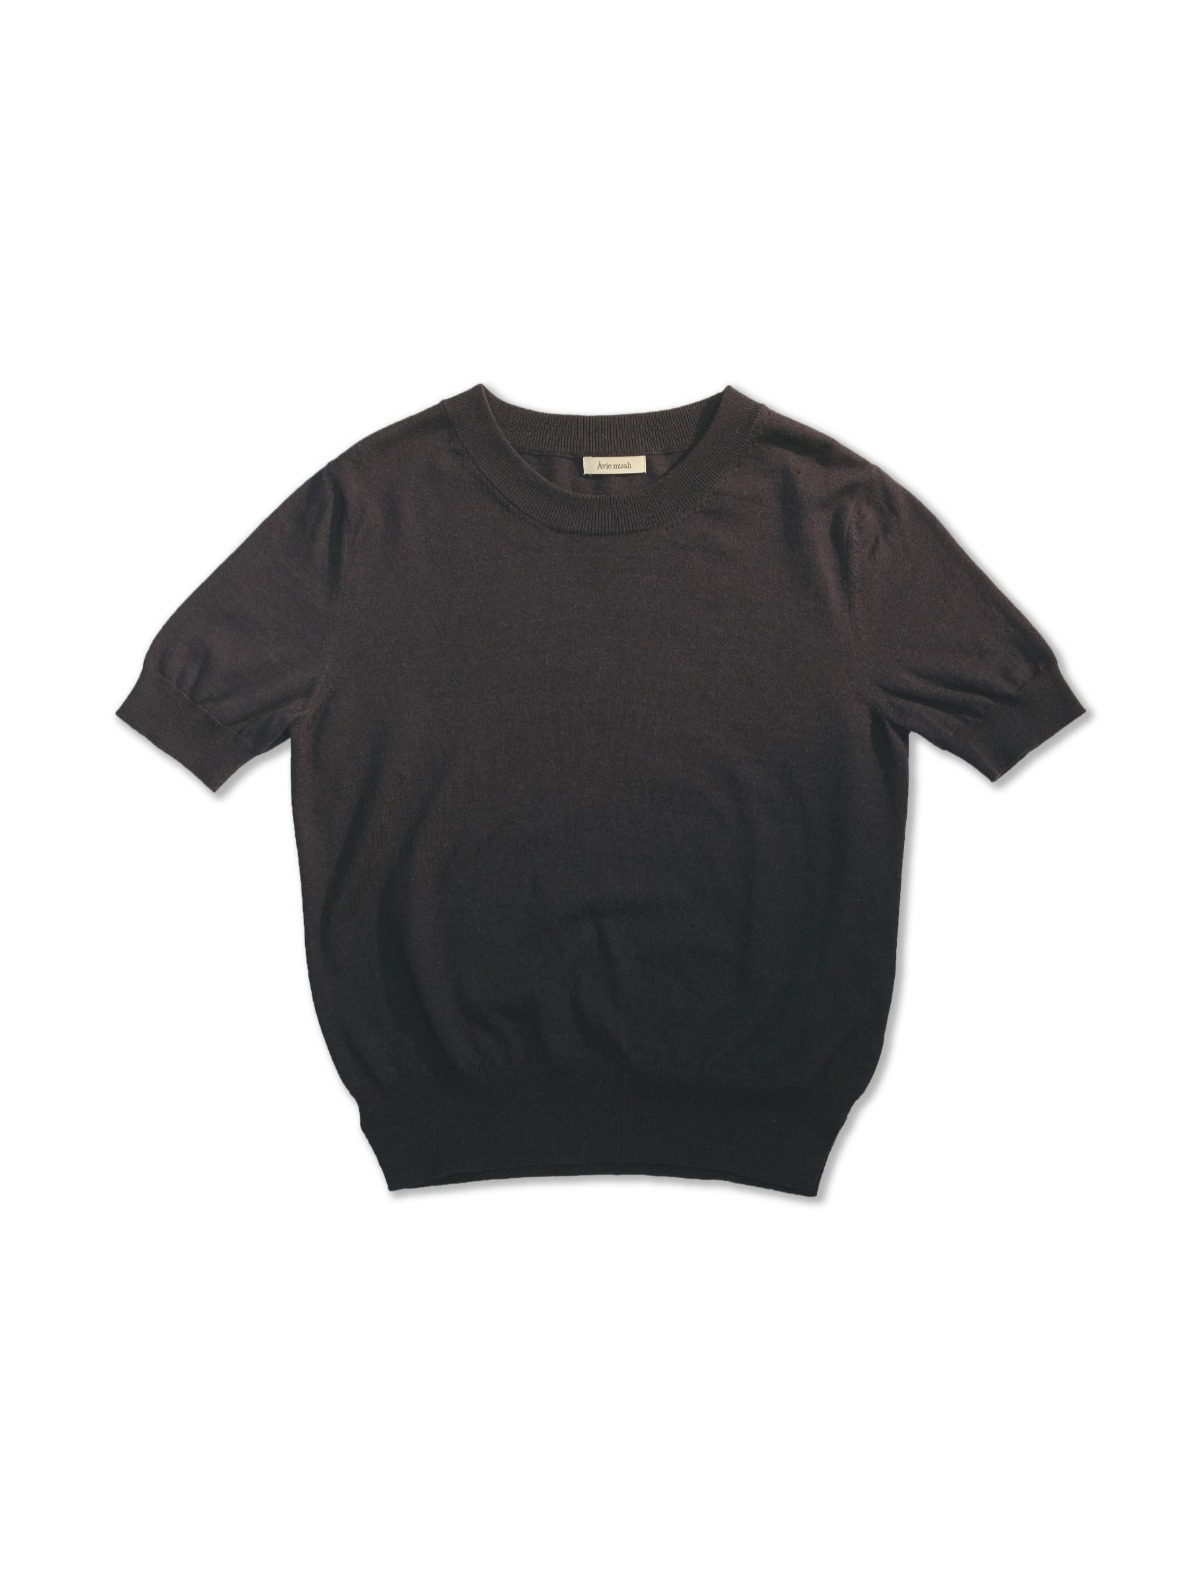 Cotton-Cashmere Short-Sleeve Sweater (Navy)